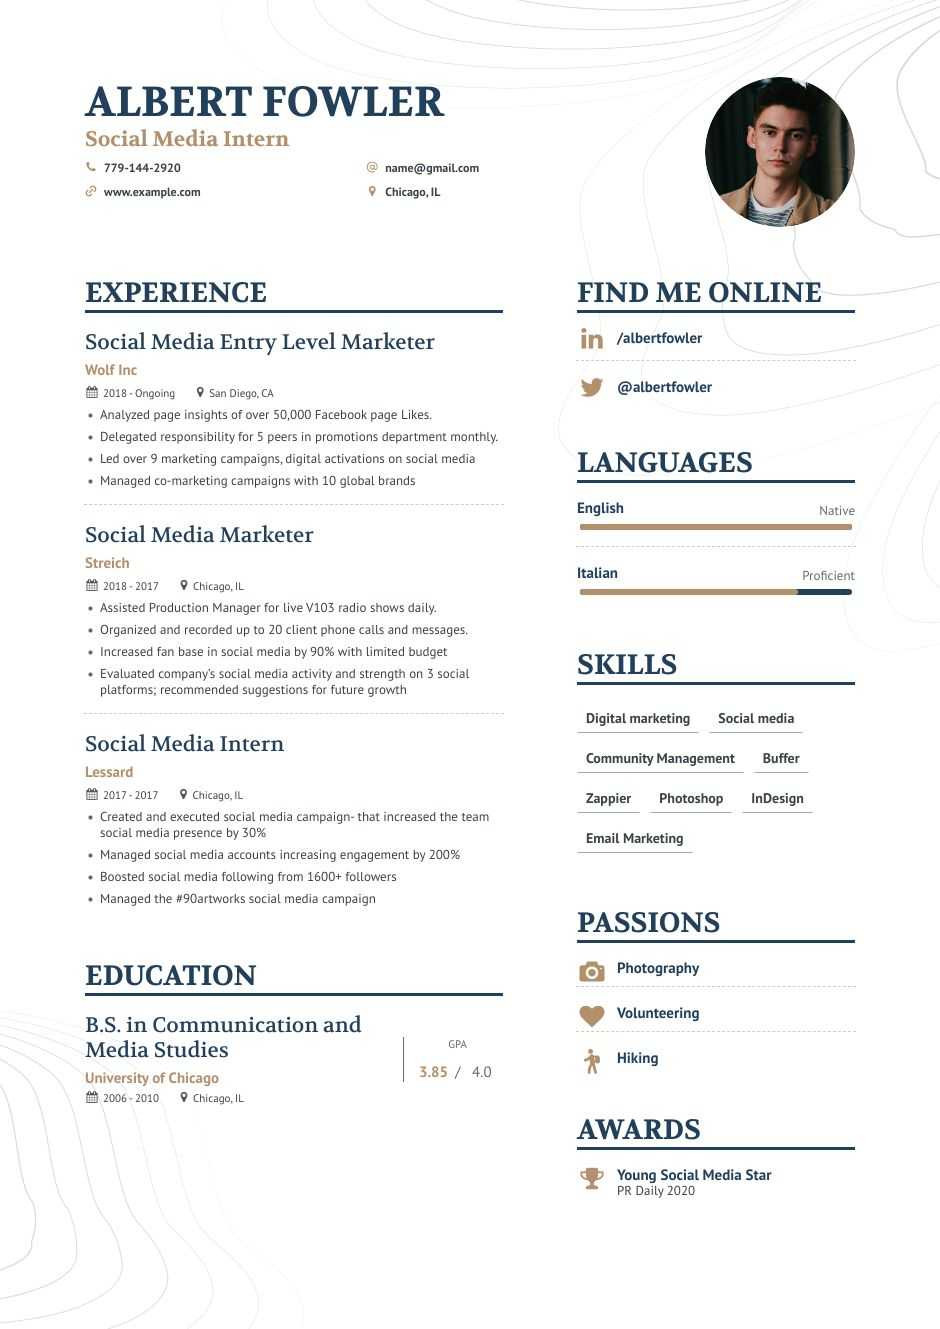 Sample Resume for social Media Specialist social Media Manager Resume Examples & Guide for 2021